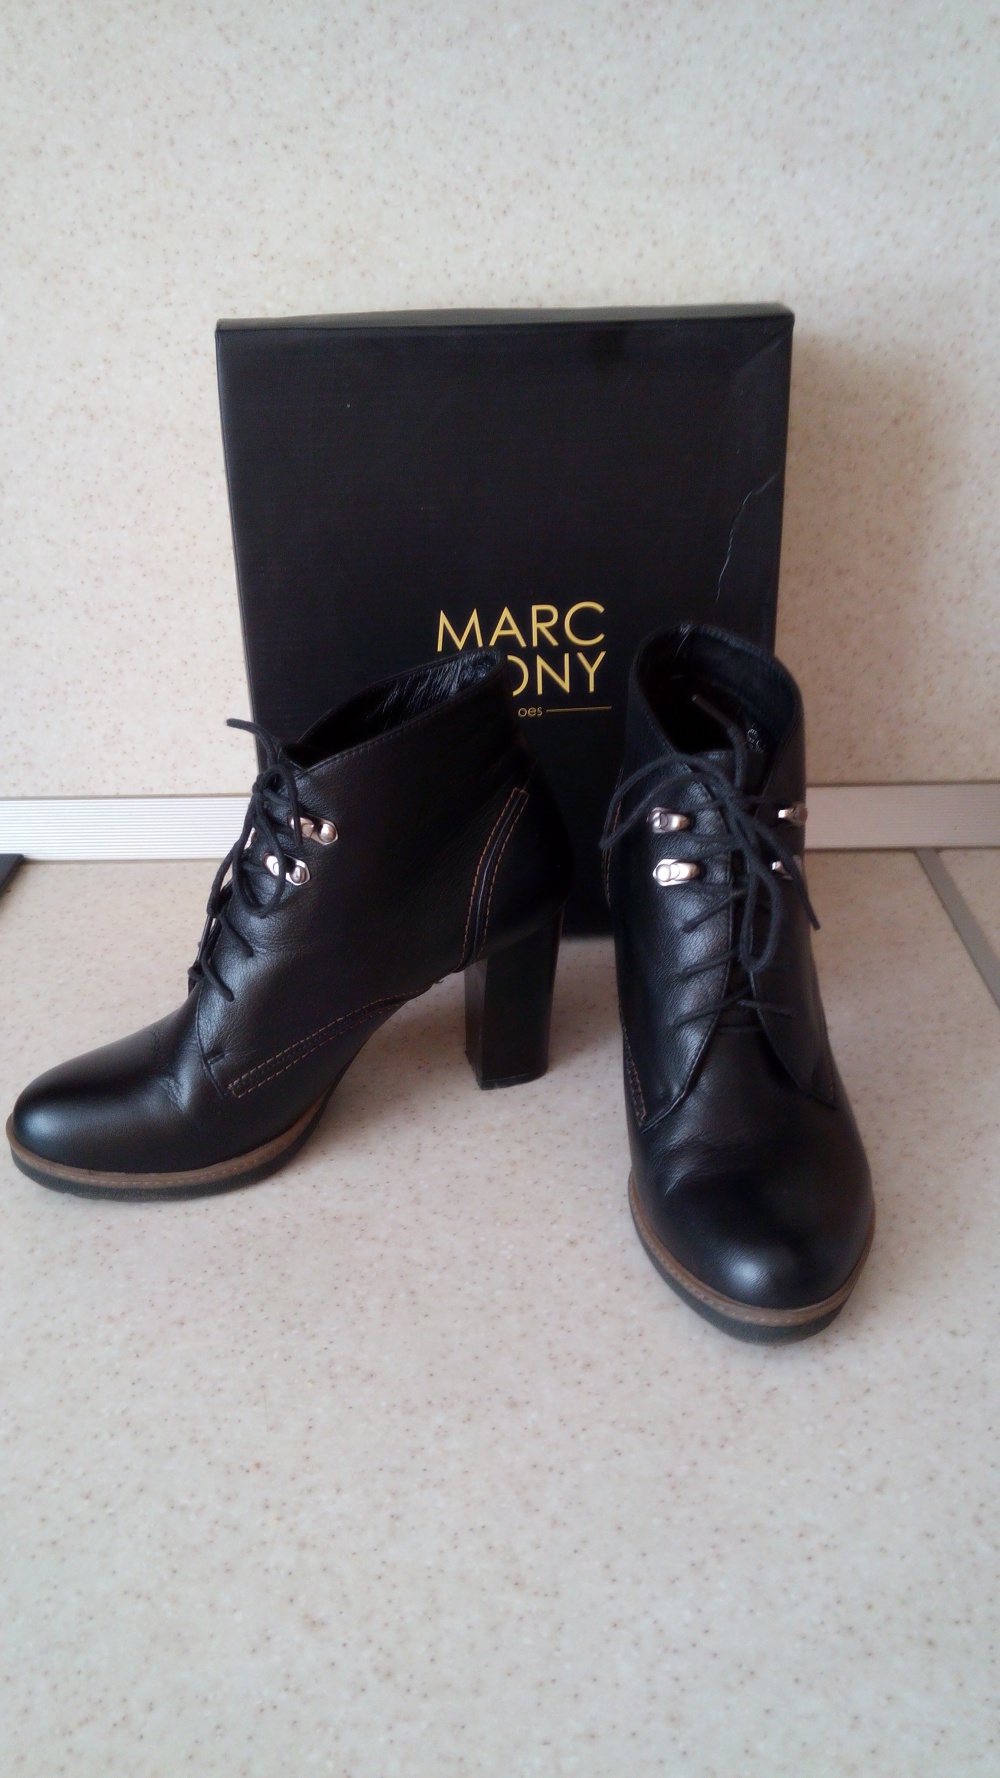 Ботинки кожа Marc Cony 38 р-р